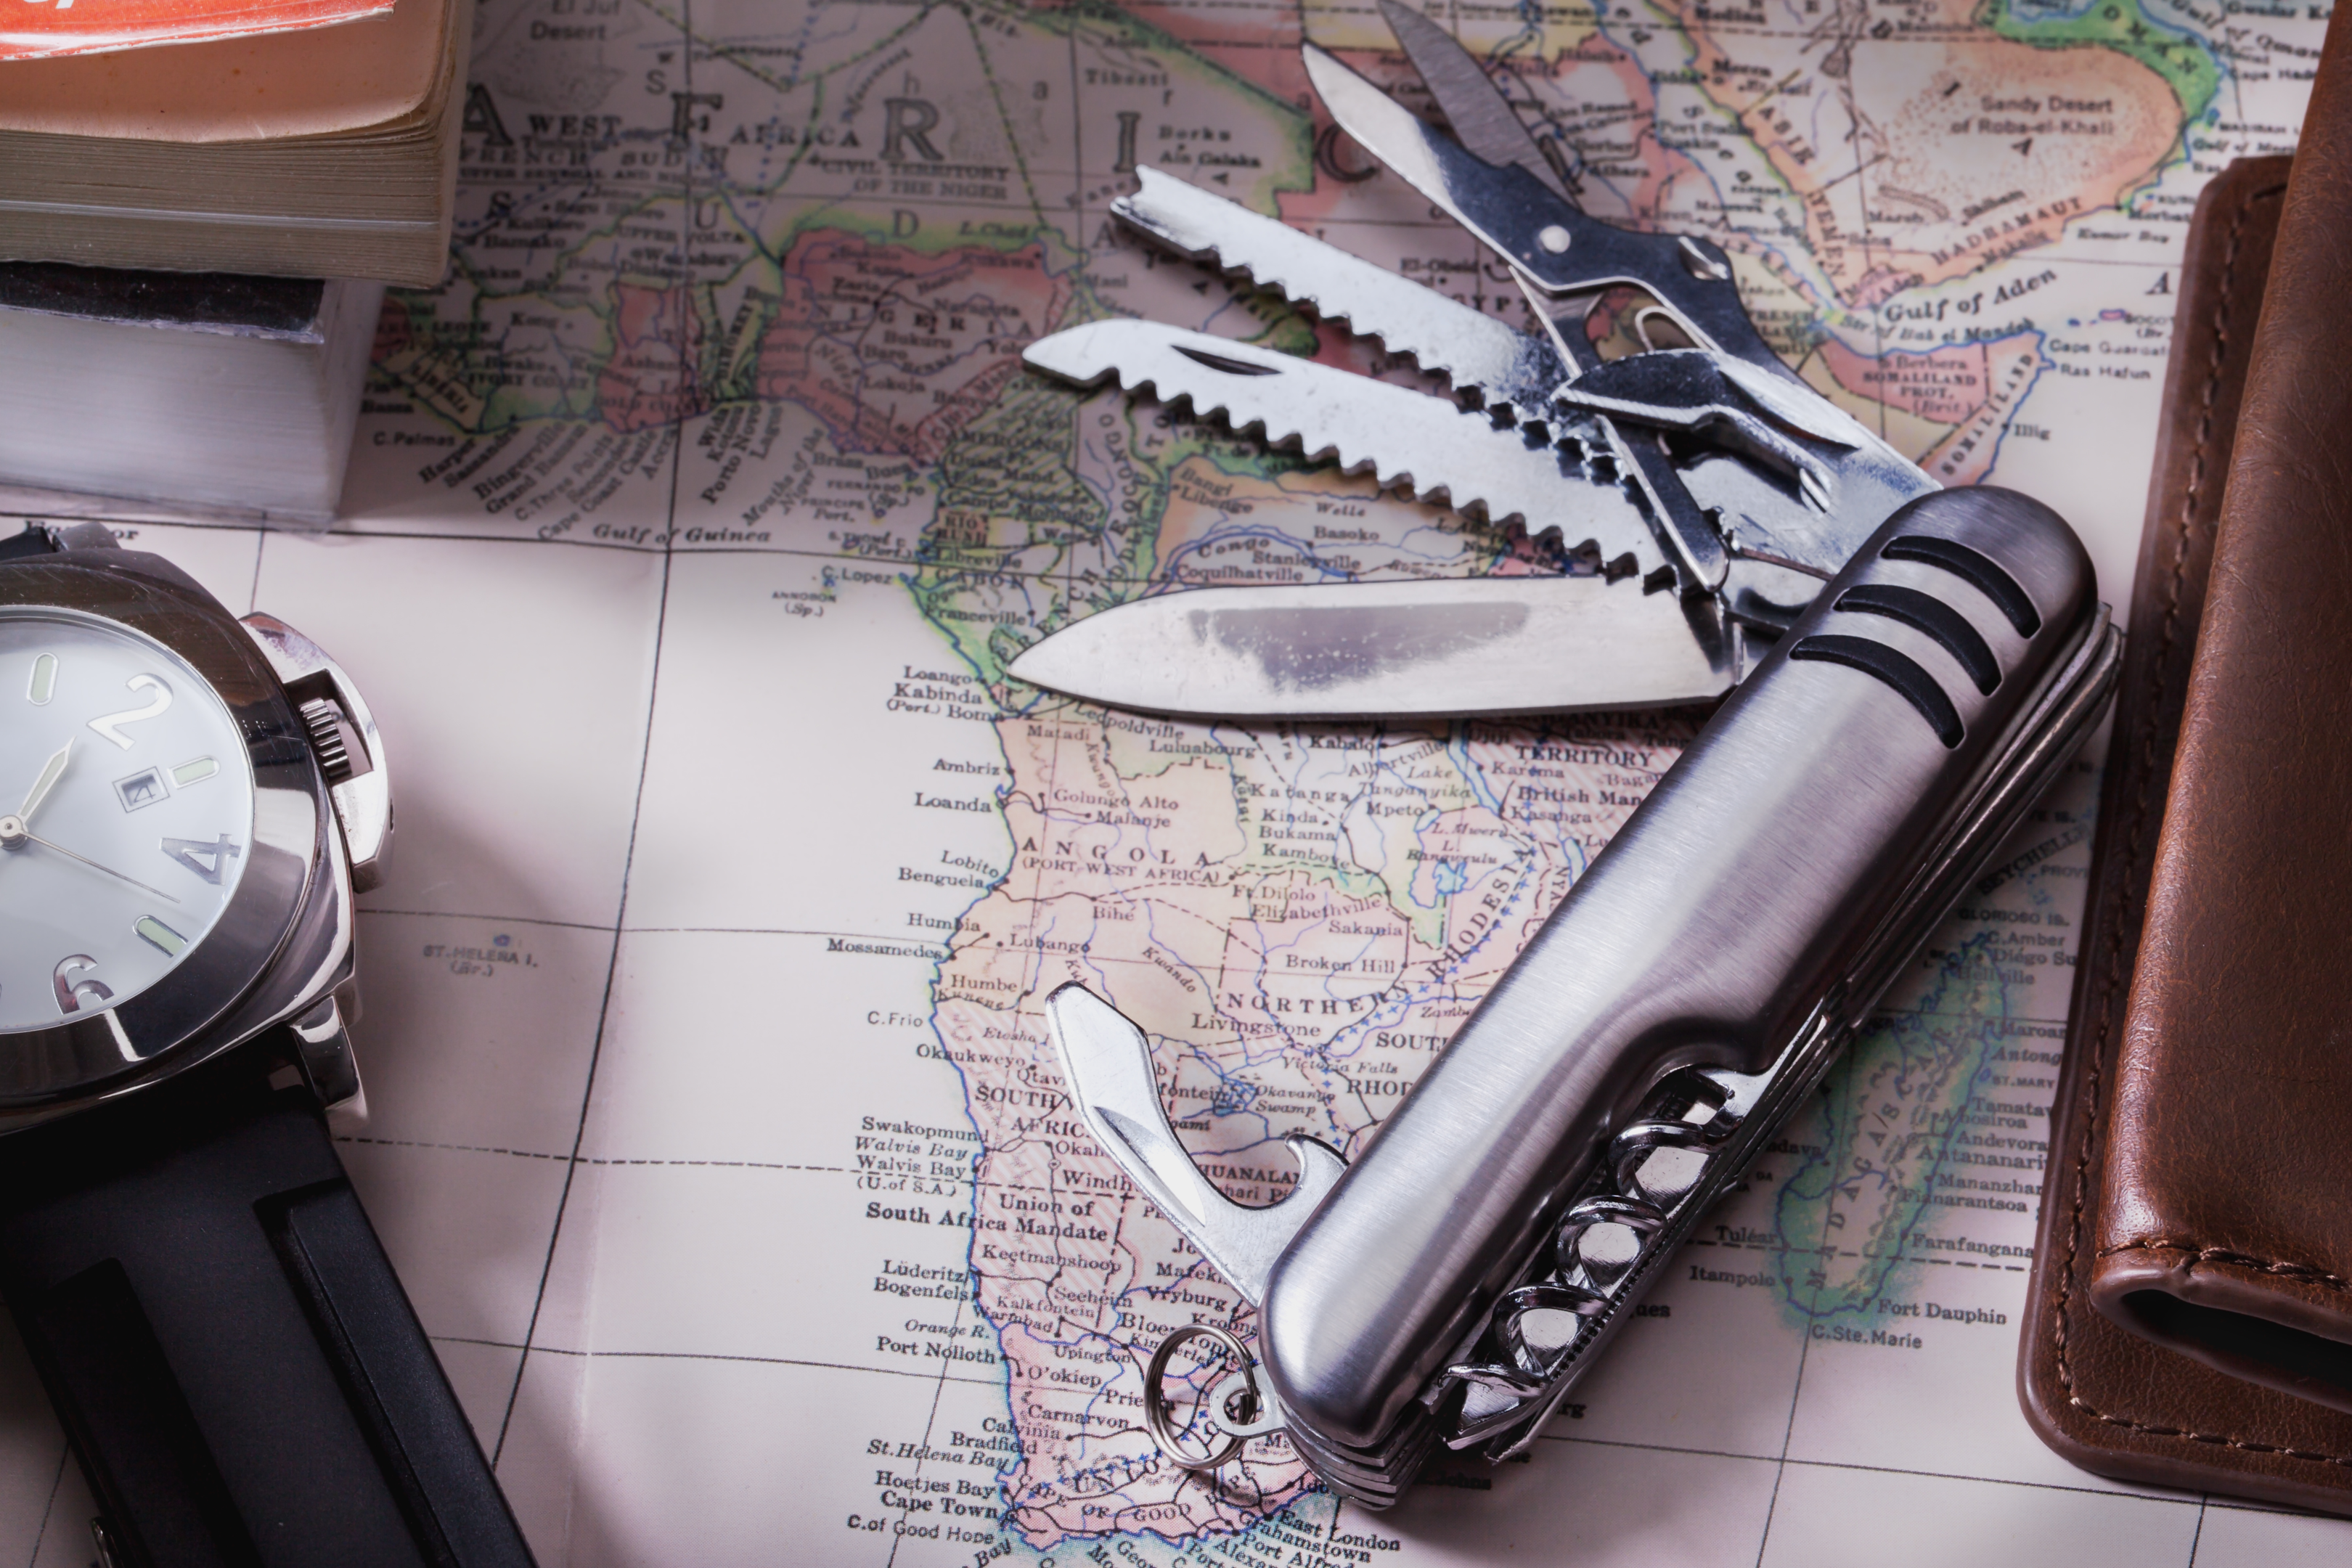 Can You Take a Pocket Knife on a Plane?